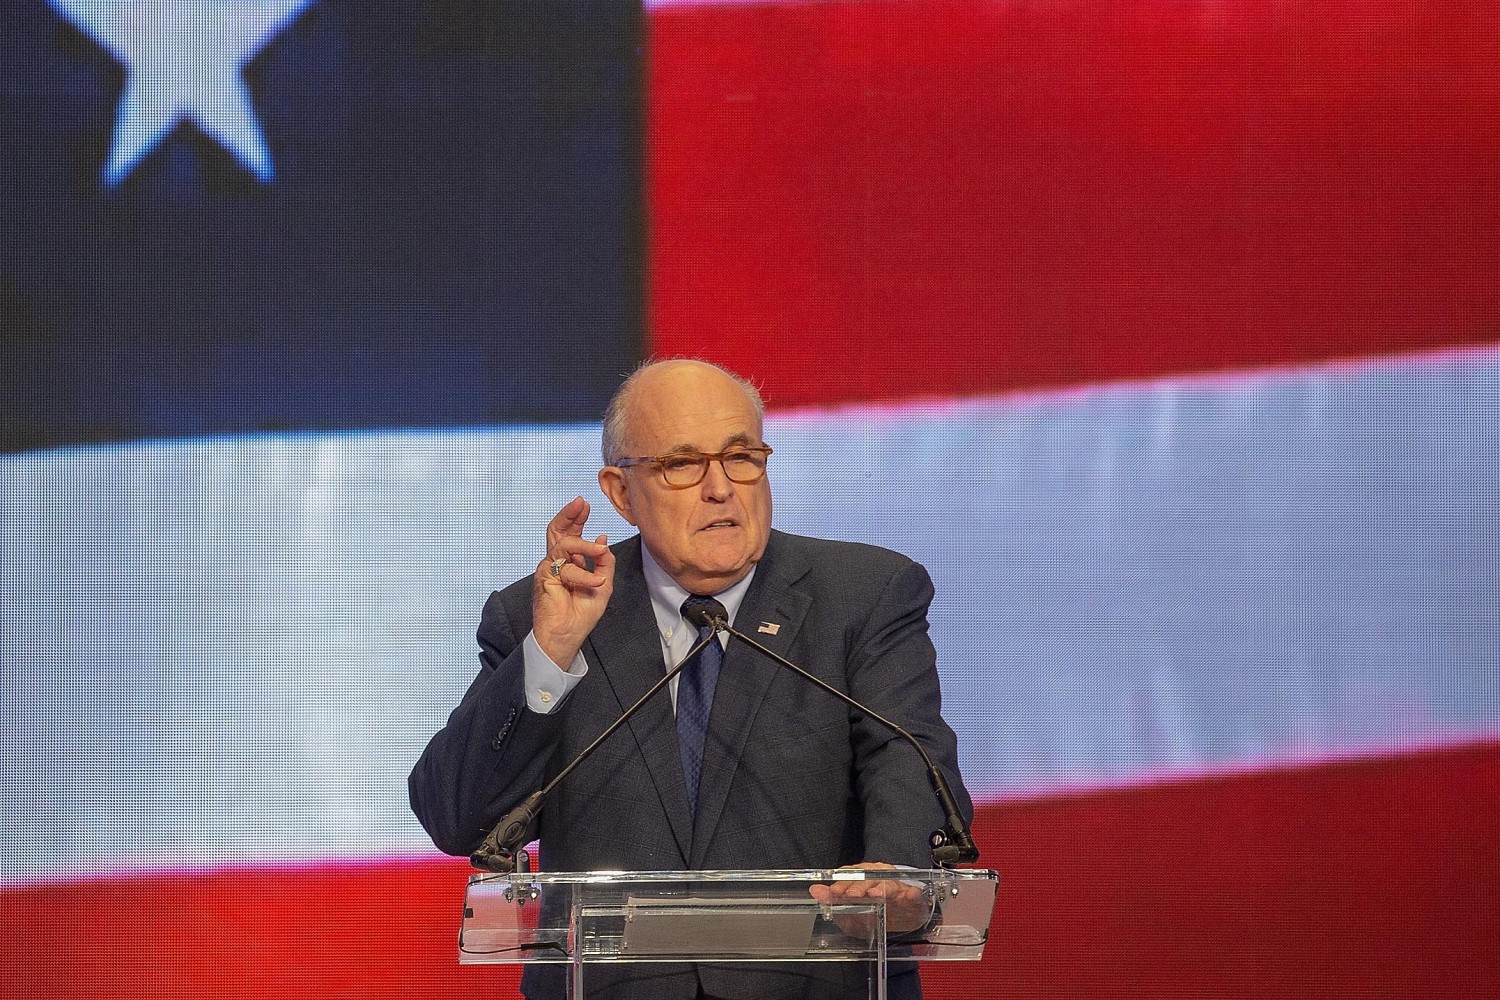 President Donald Trump’s personal attorney Rudy Giuliani. | Tasos Katopodis/Getty Images